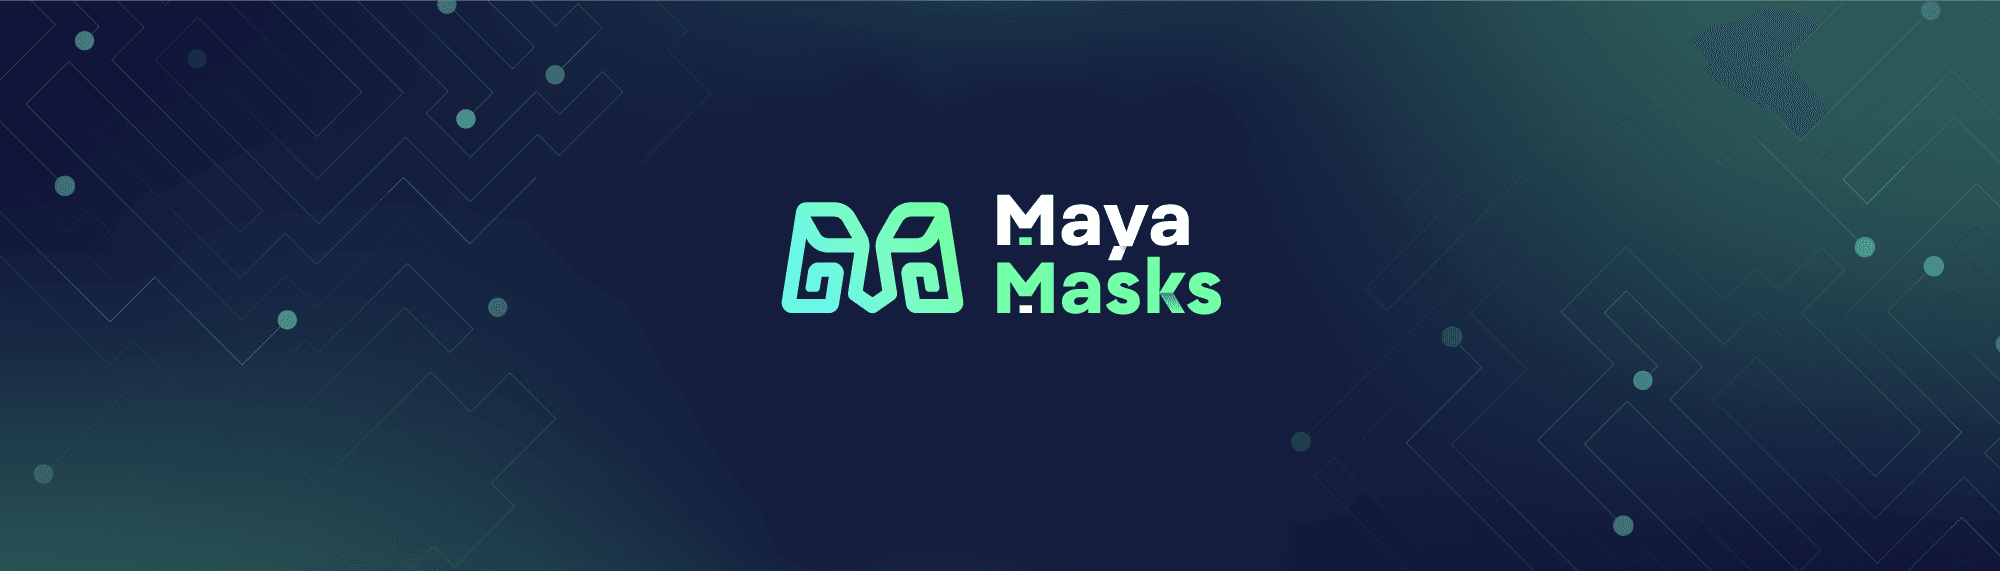 MayaMasks banner